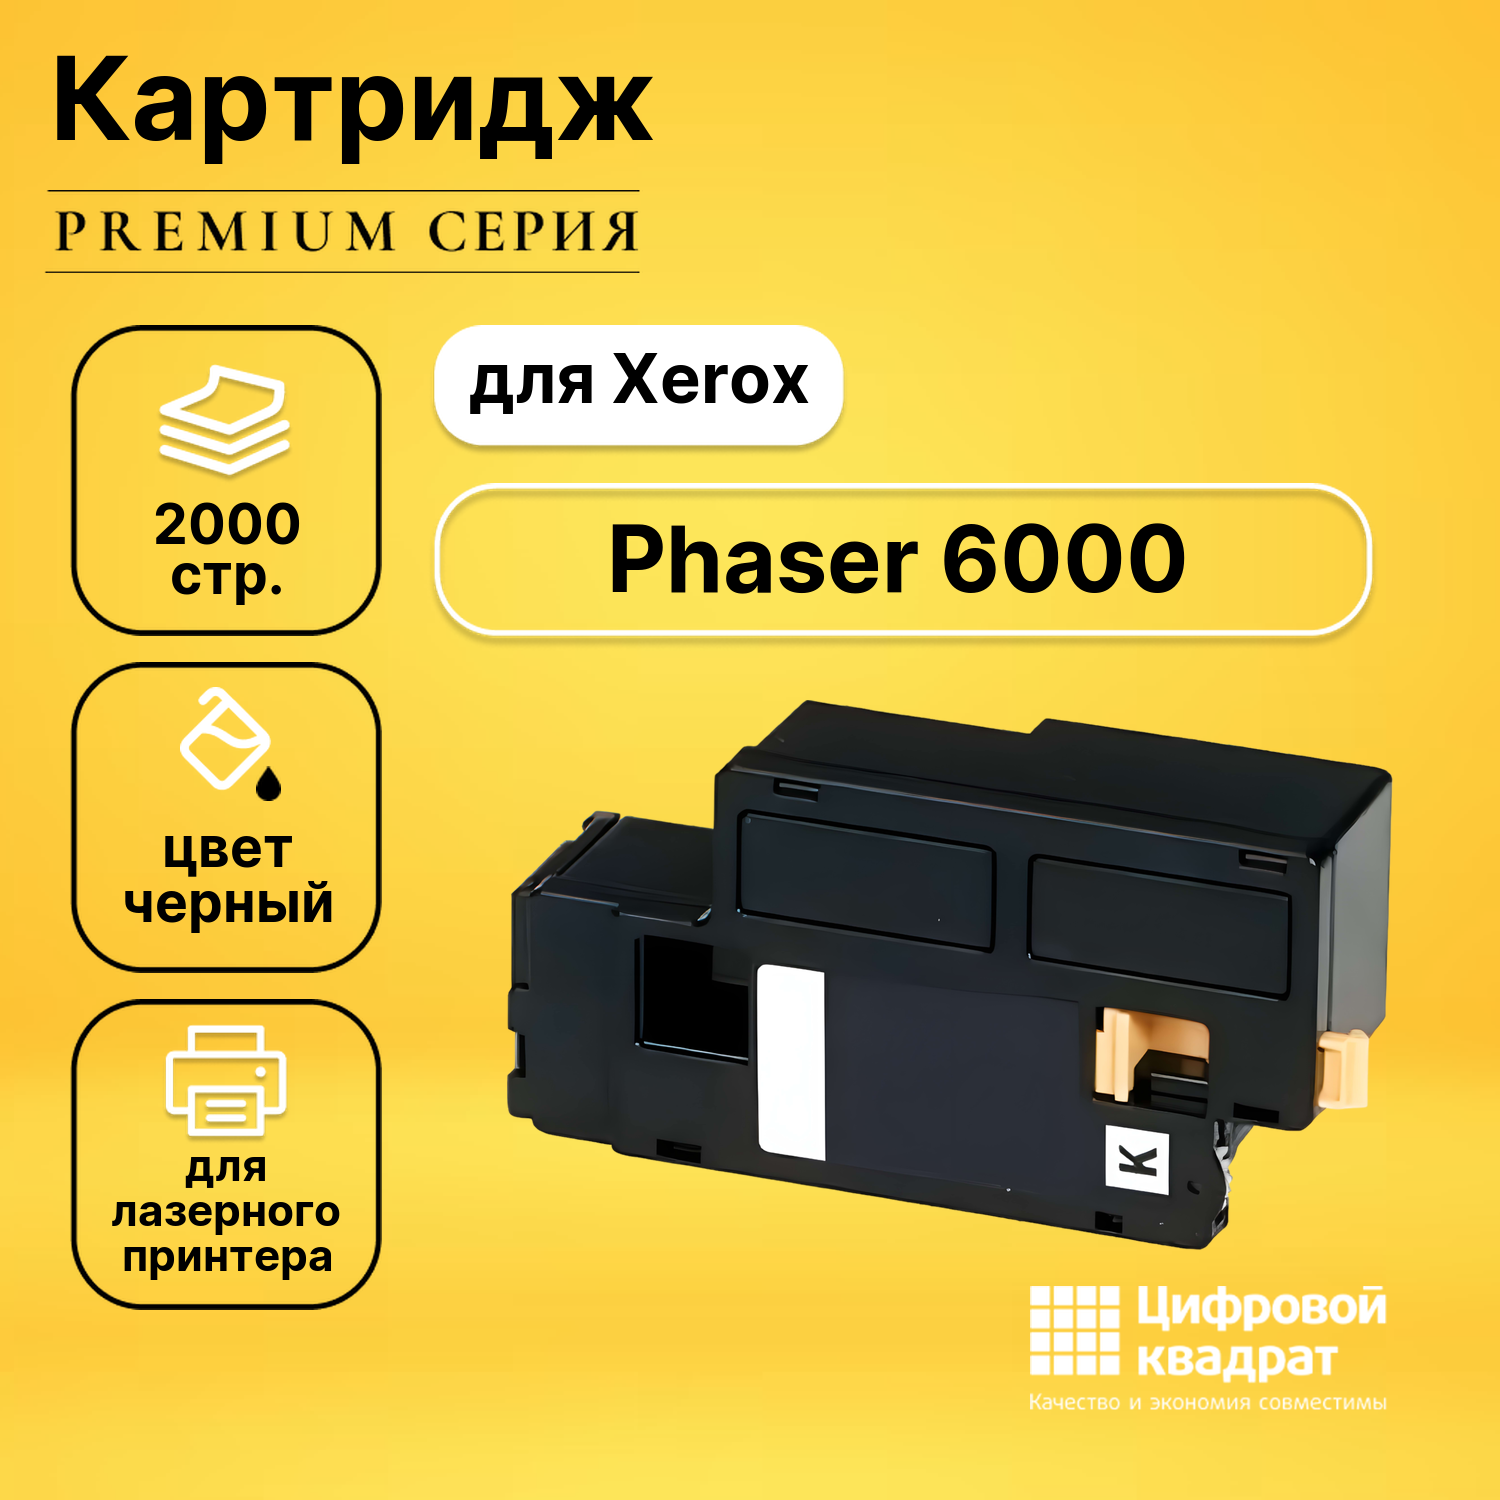 Картридж DS для Xerox Phaser 6000 совместимый